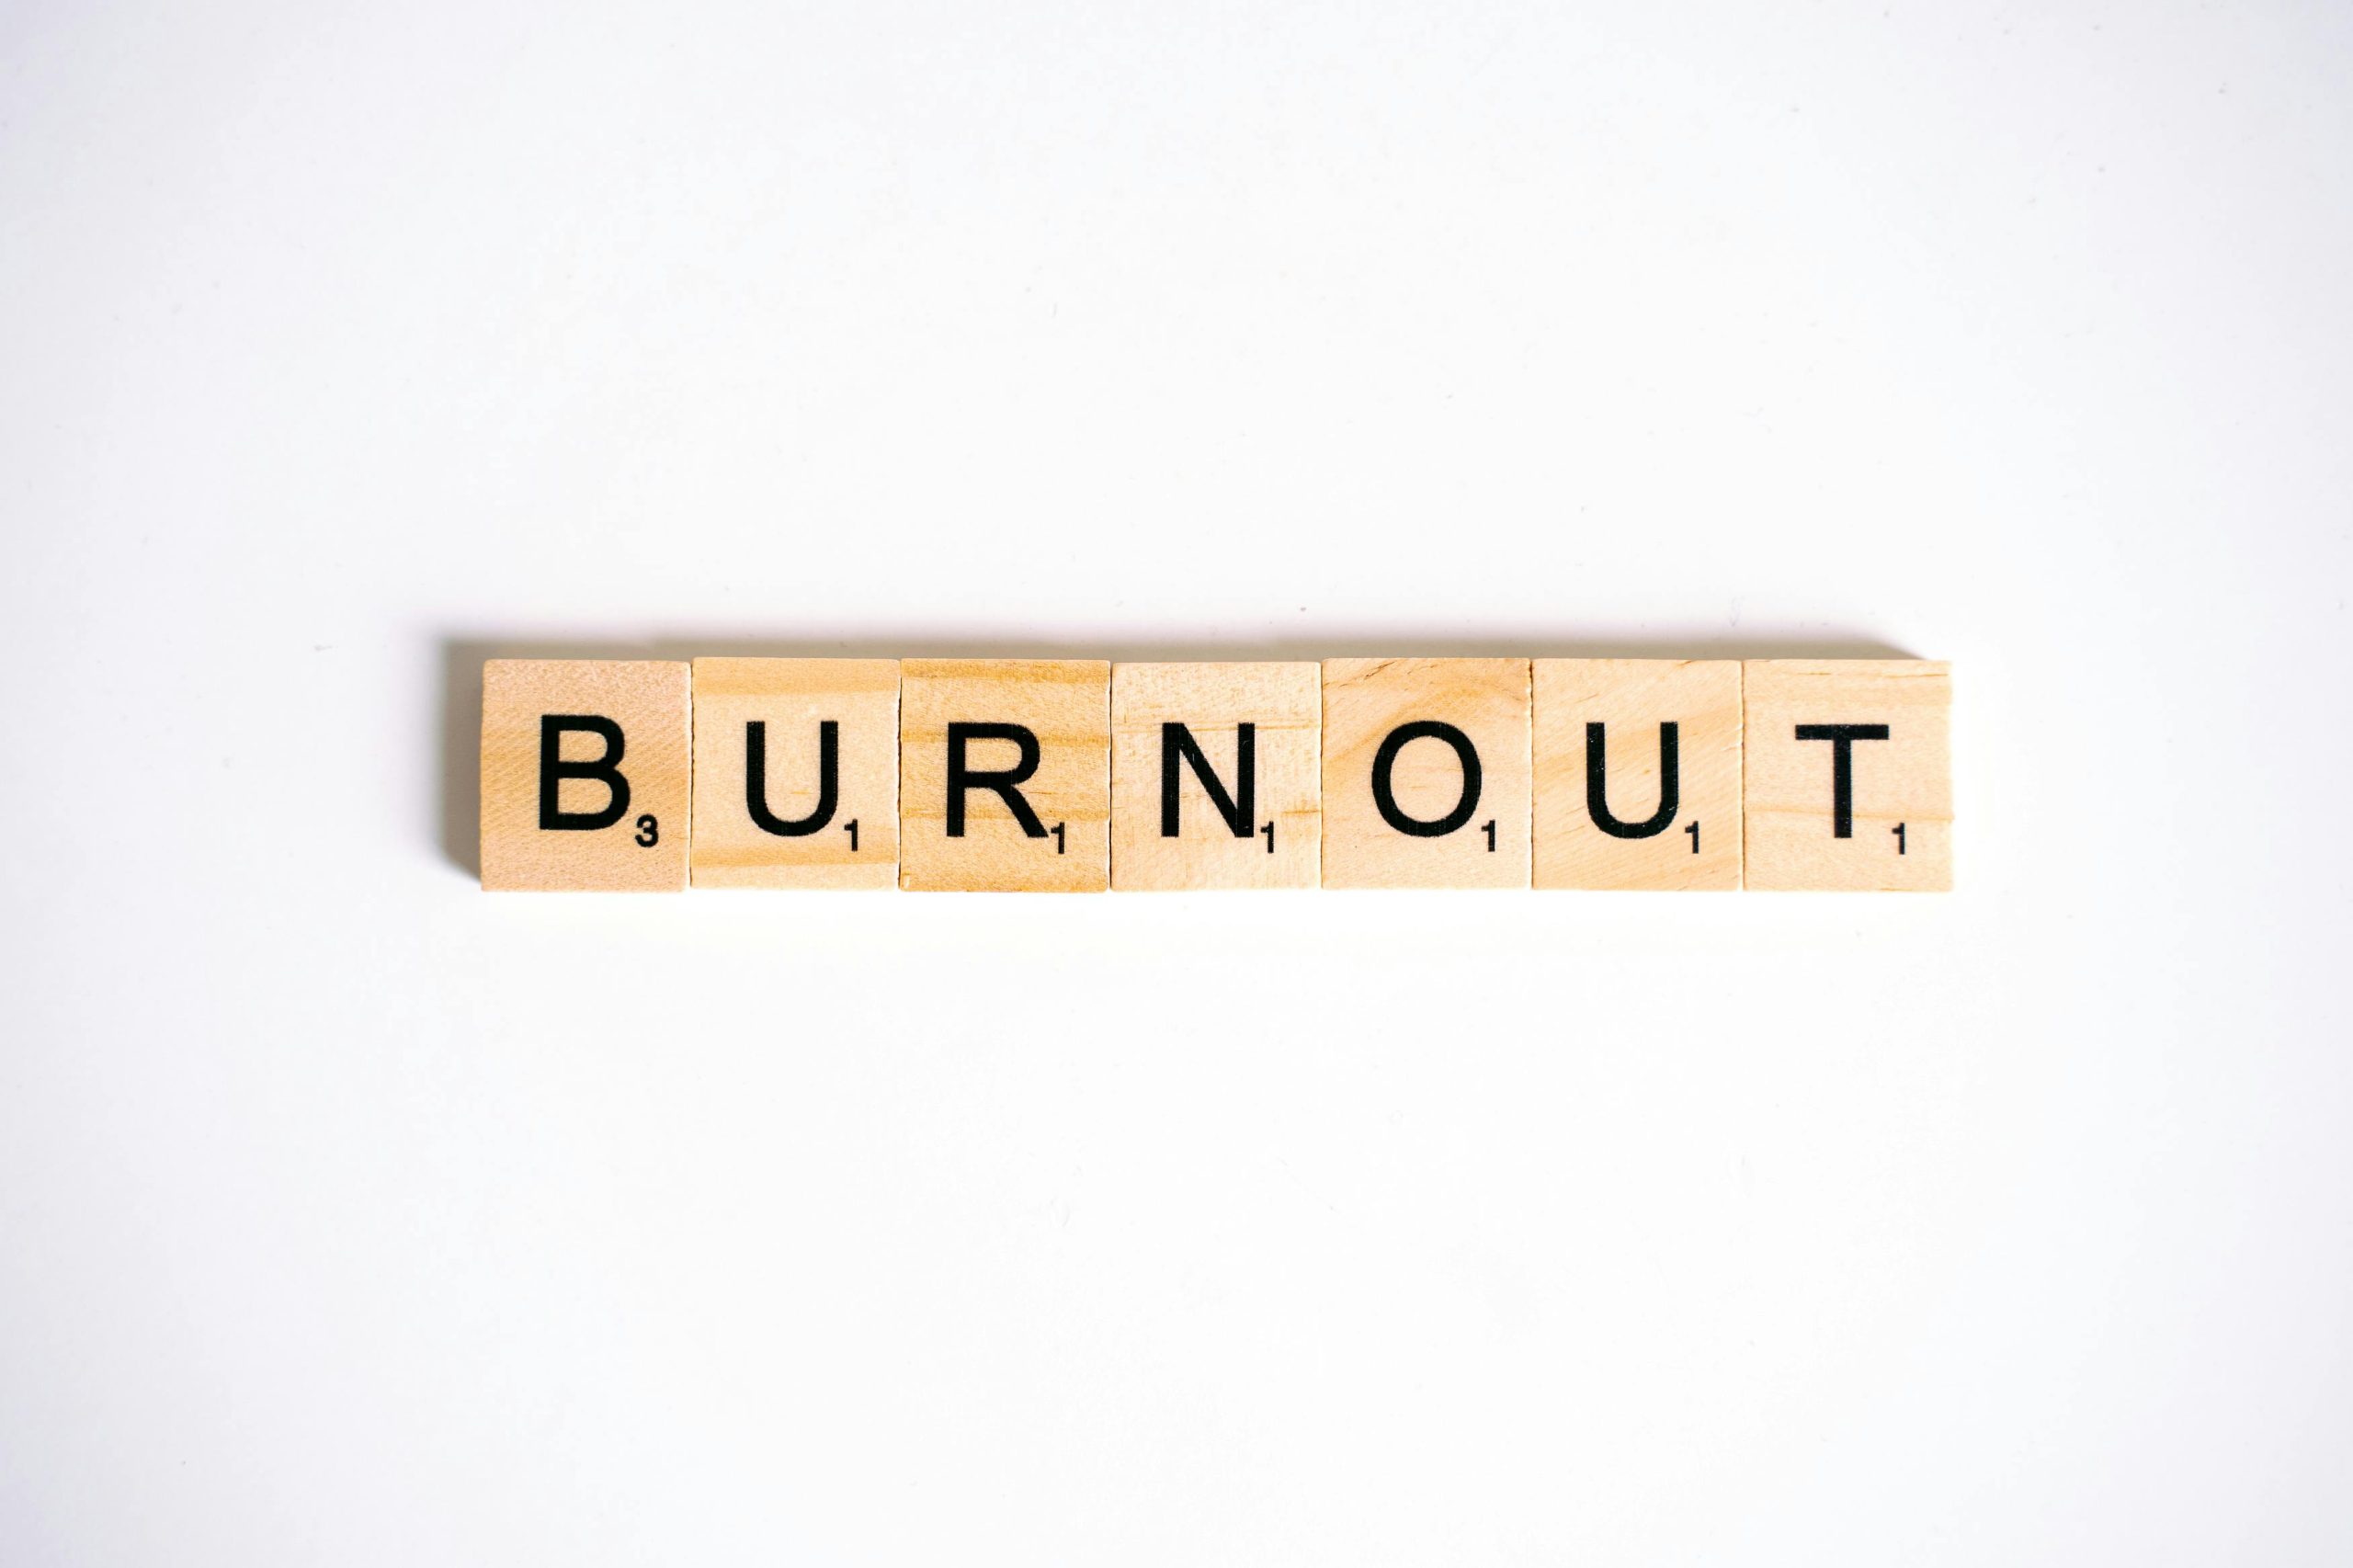 White background, wooden letter scrabble tiles spelling the word BURNOUT